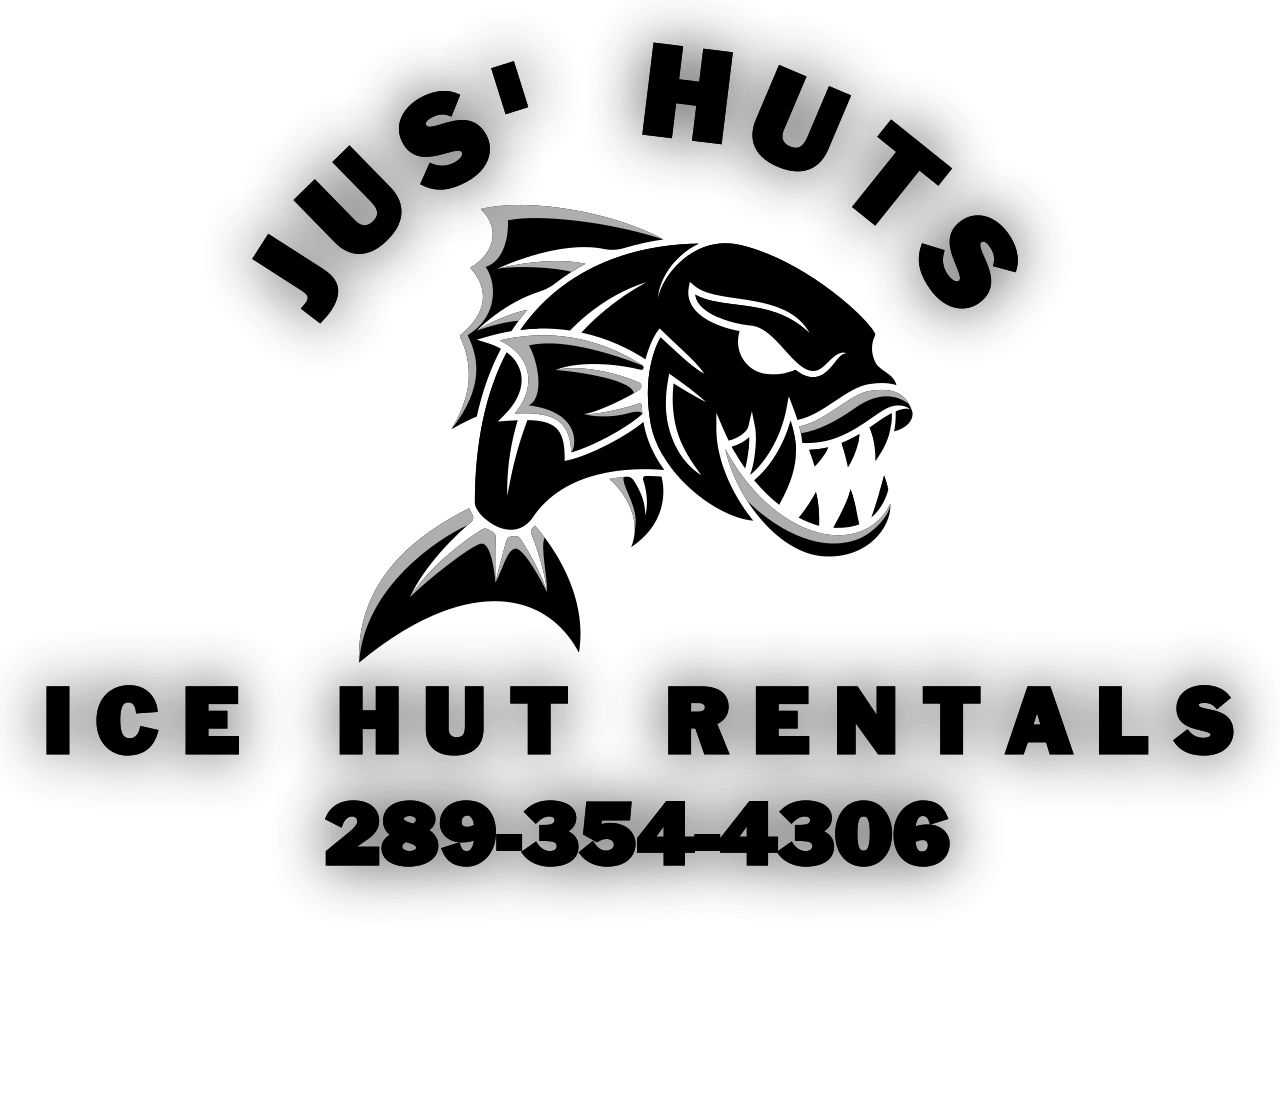 JUS' HUTS's web page